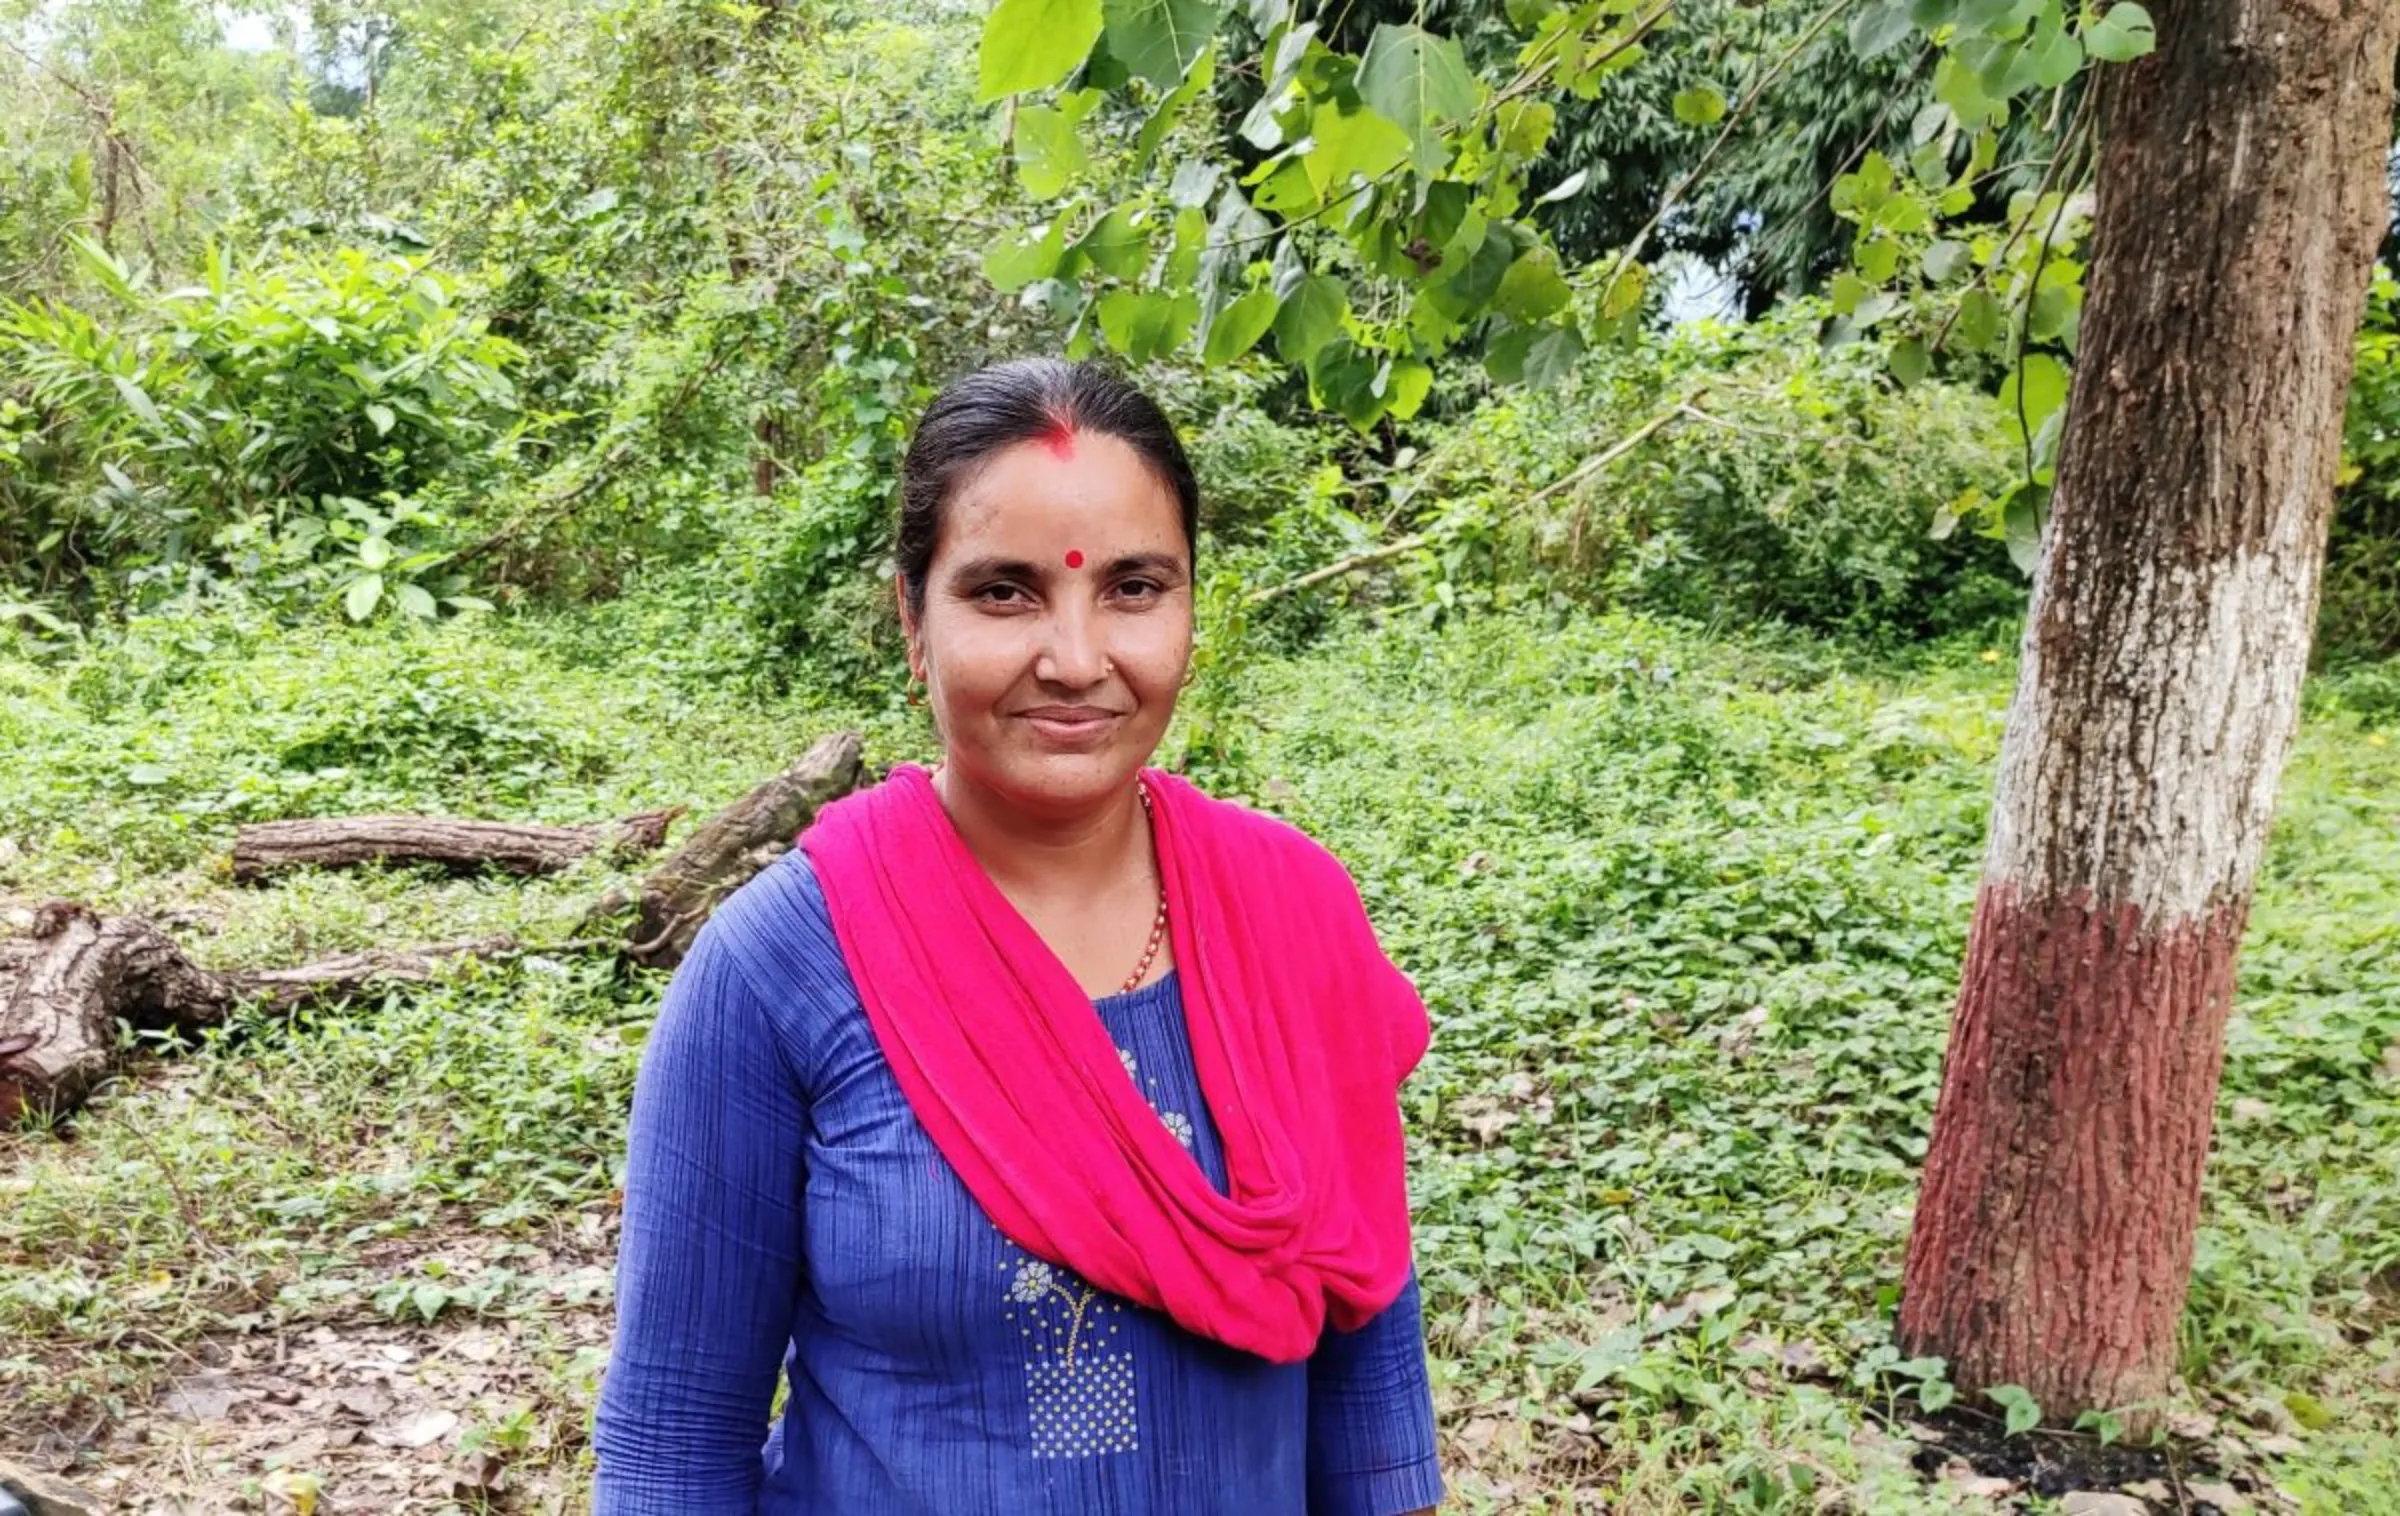 Manakumari Khatri poses for a photo in the Chisapani community forest in Nawalparasi, Nepal. September 29, 2020